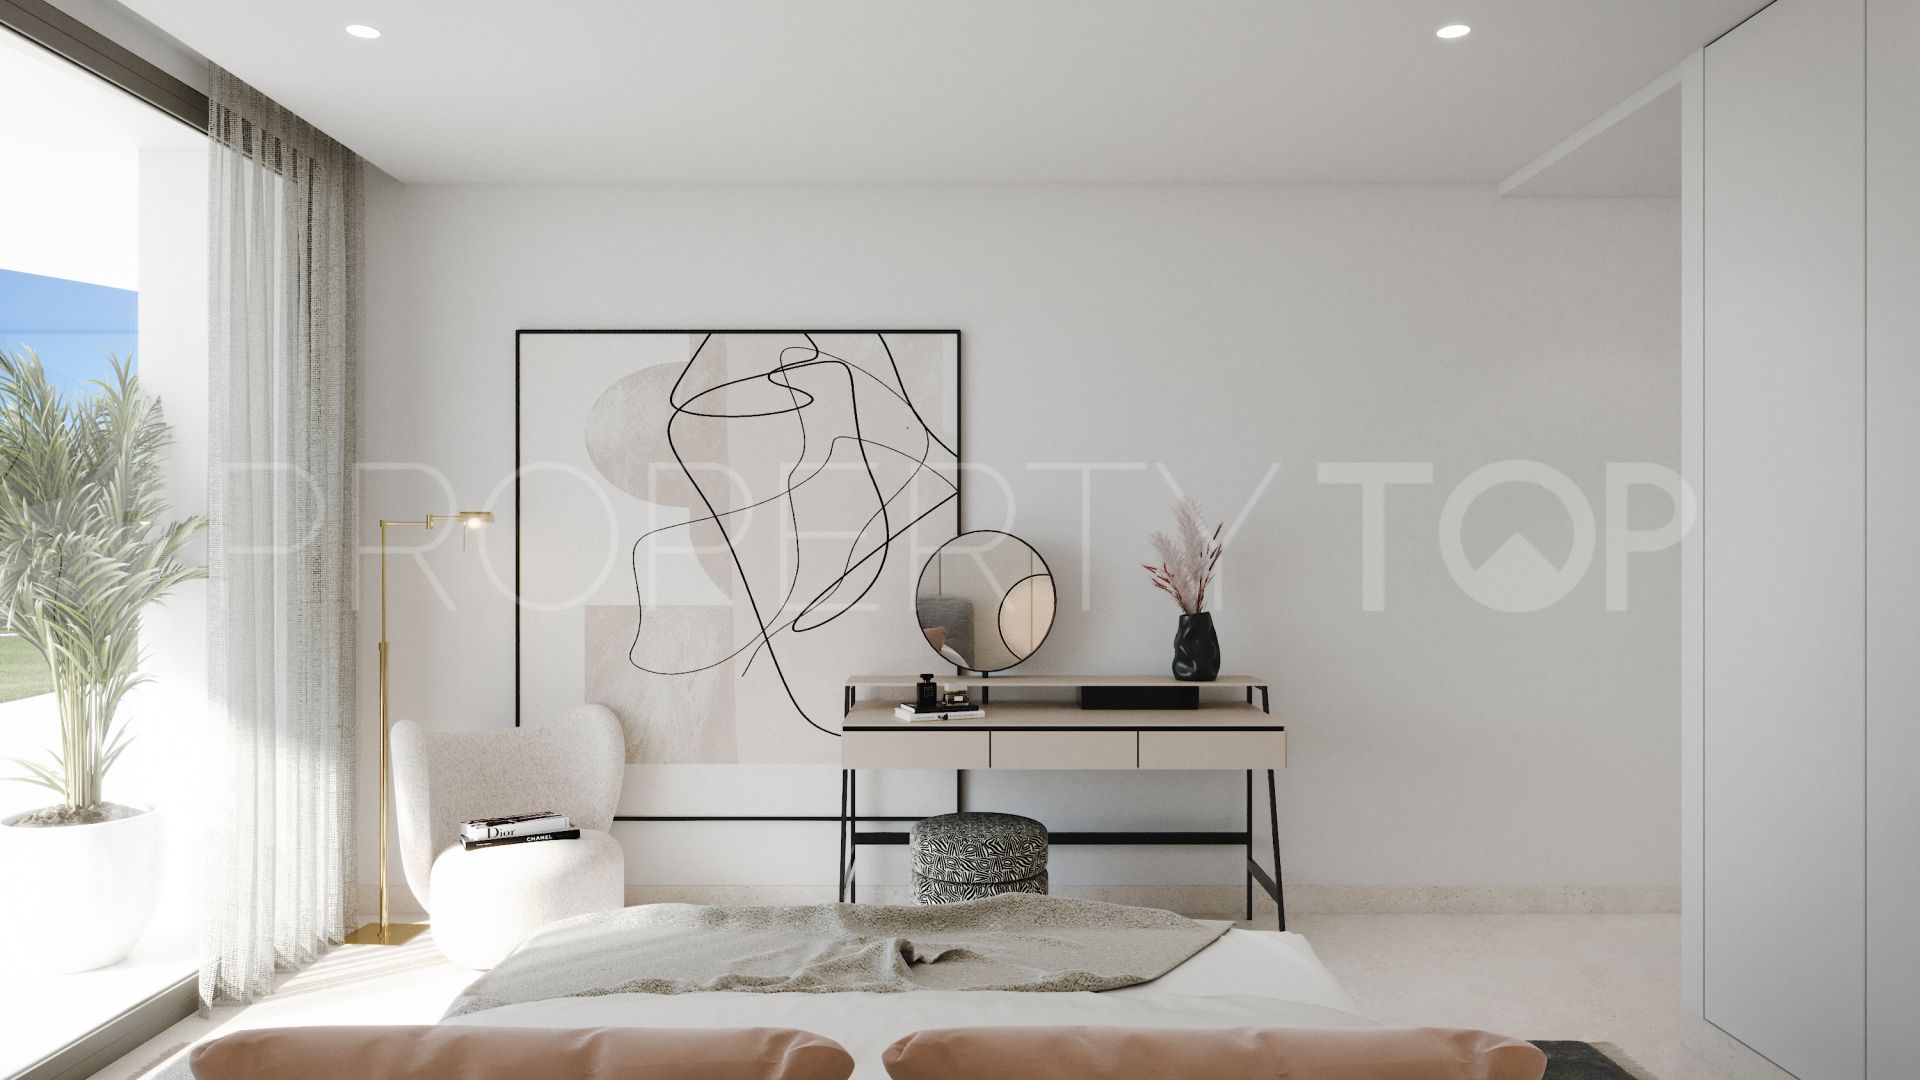 4 bedrooms Altos de La Quinta apartment for sale